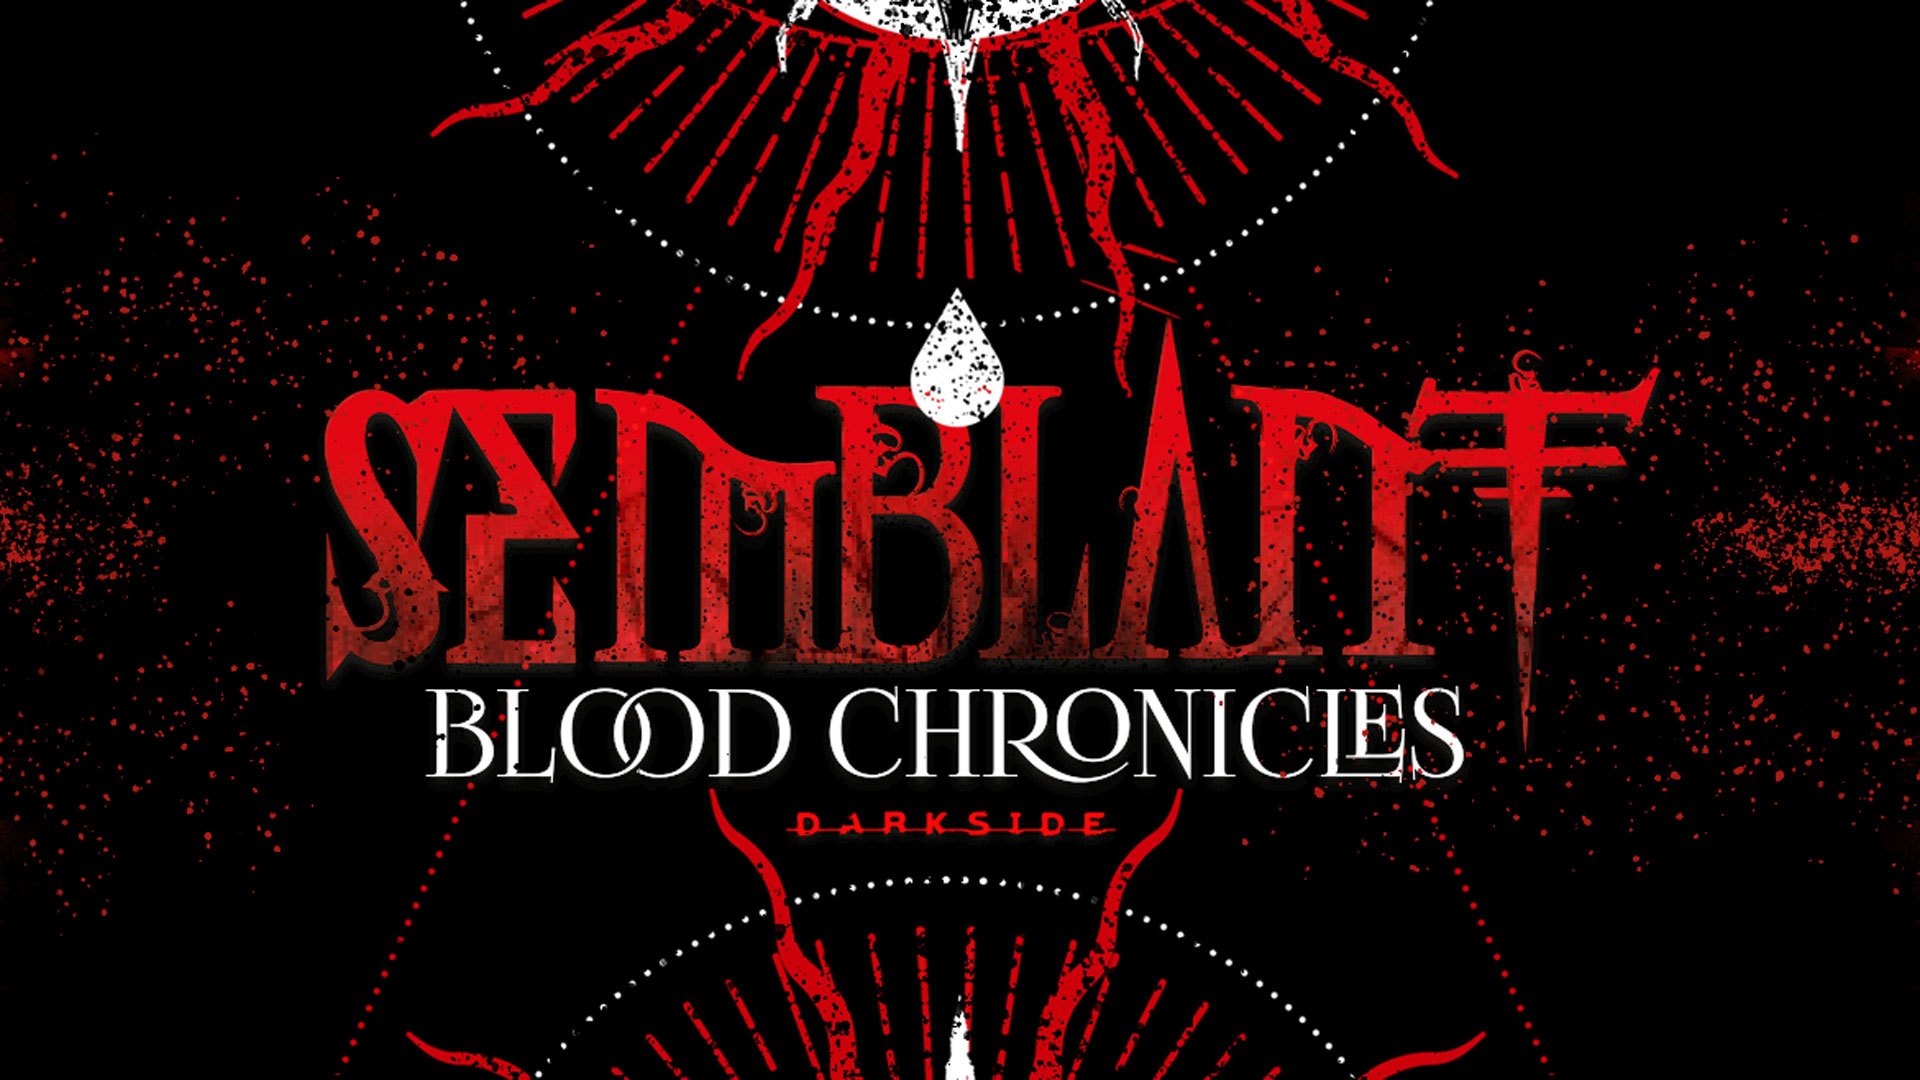 SEMBLANT: BLOOD CHRONICLES